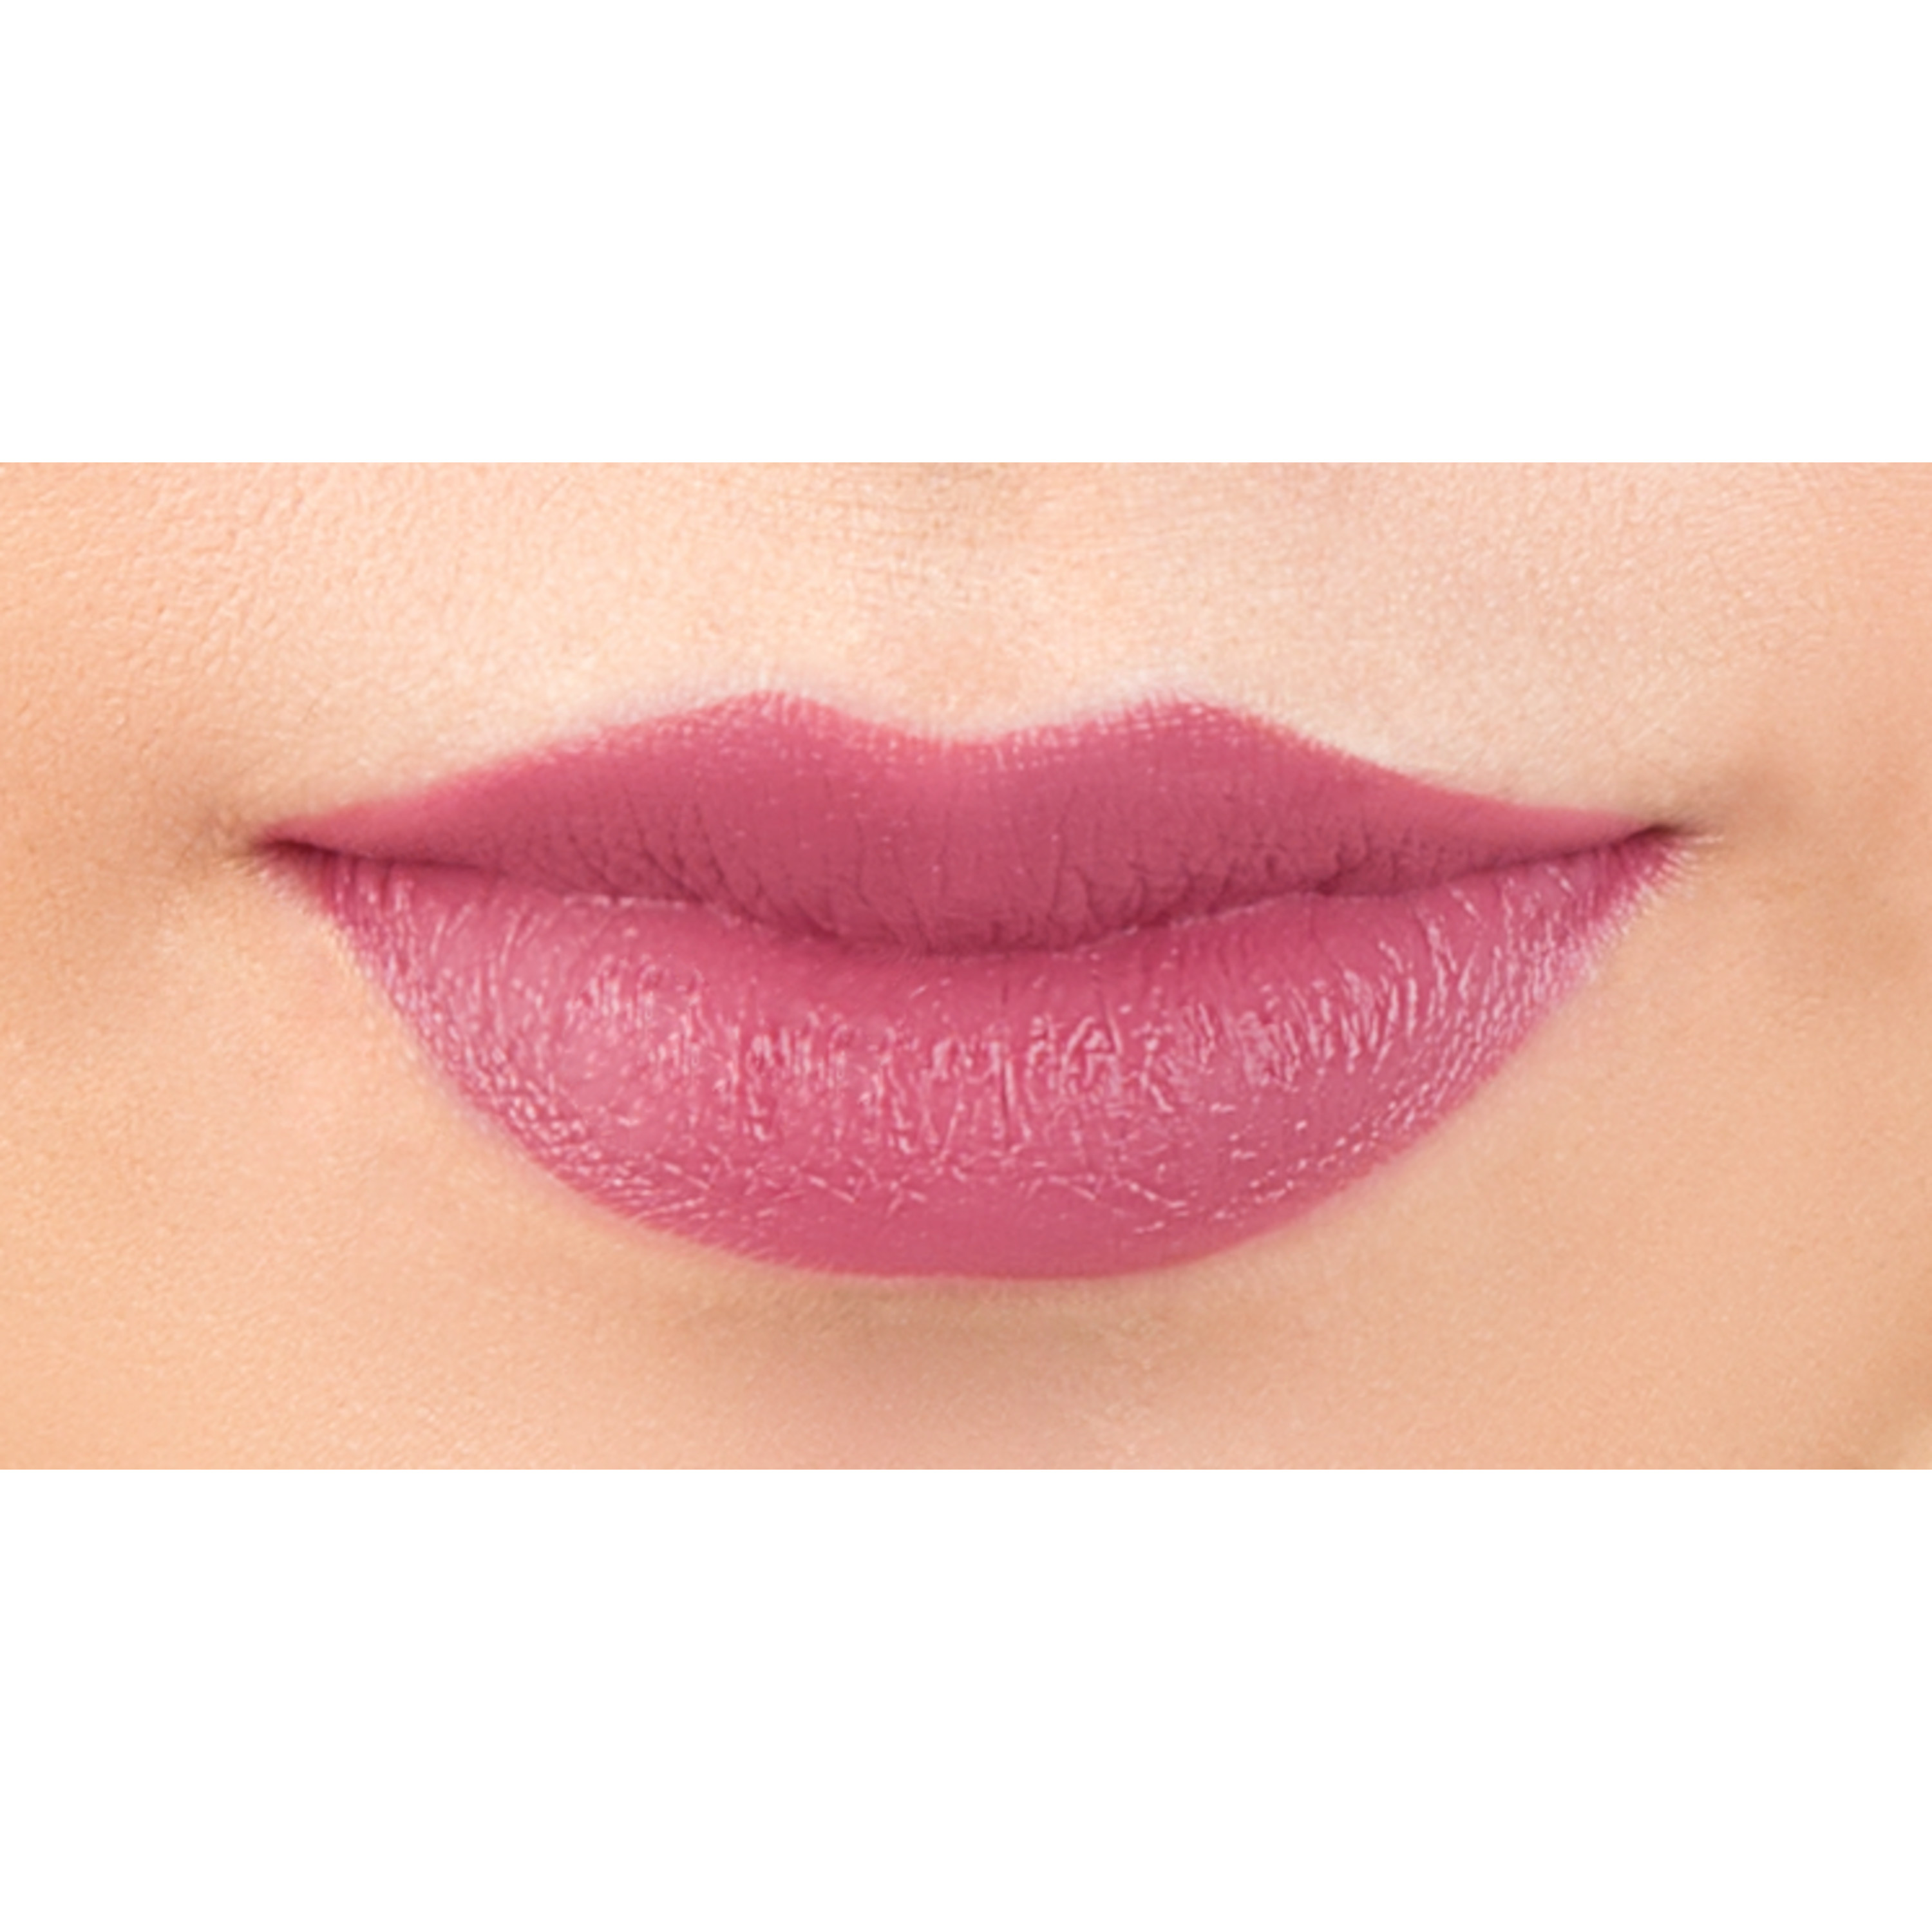 Physicians Formula Organic WearÃÂ® Nourishing Lipstick, Desert Rose - image 4 of 5